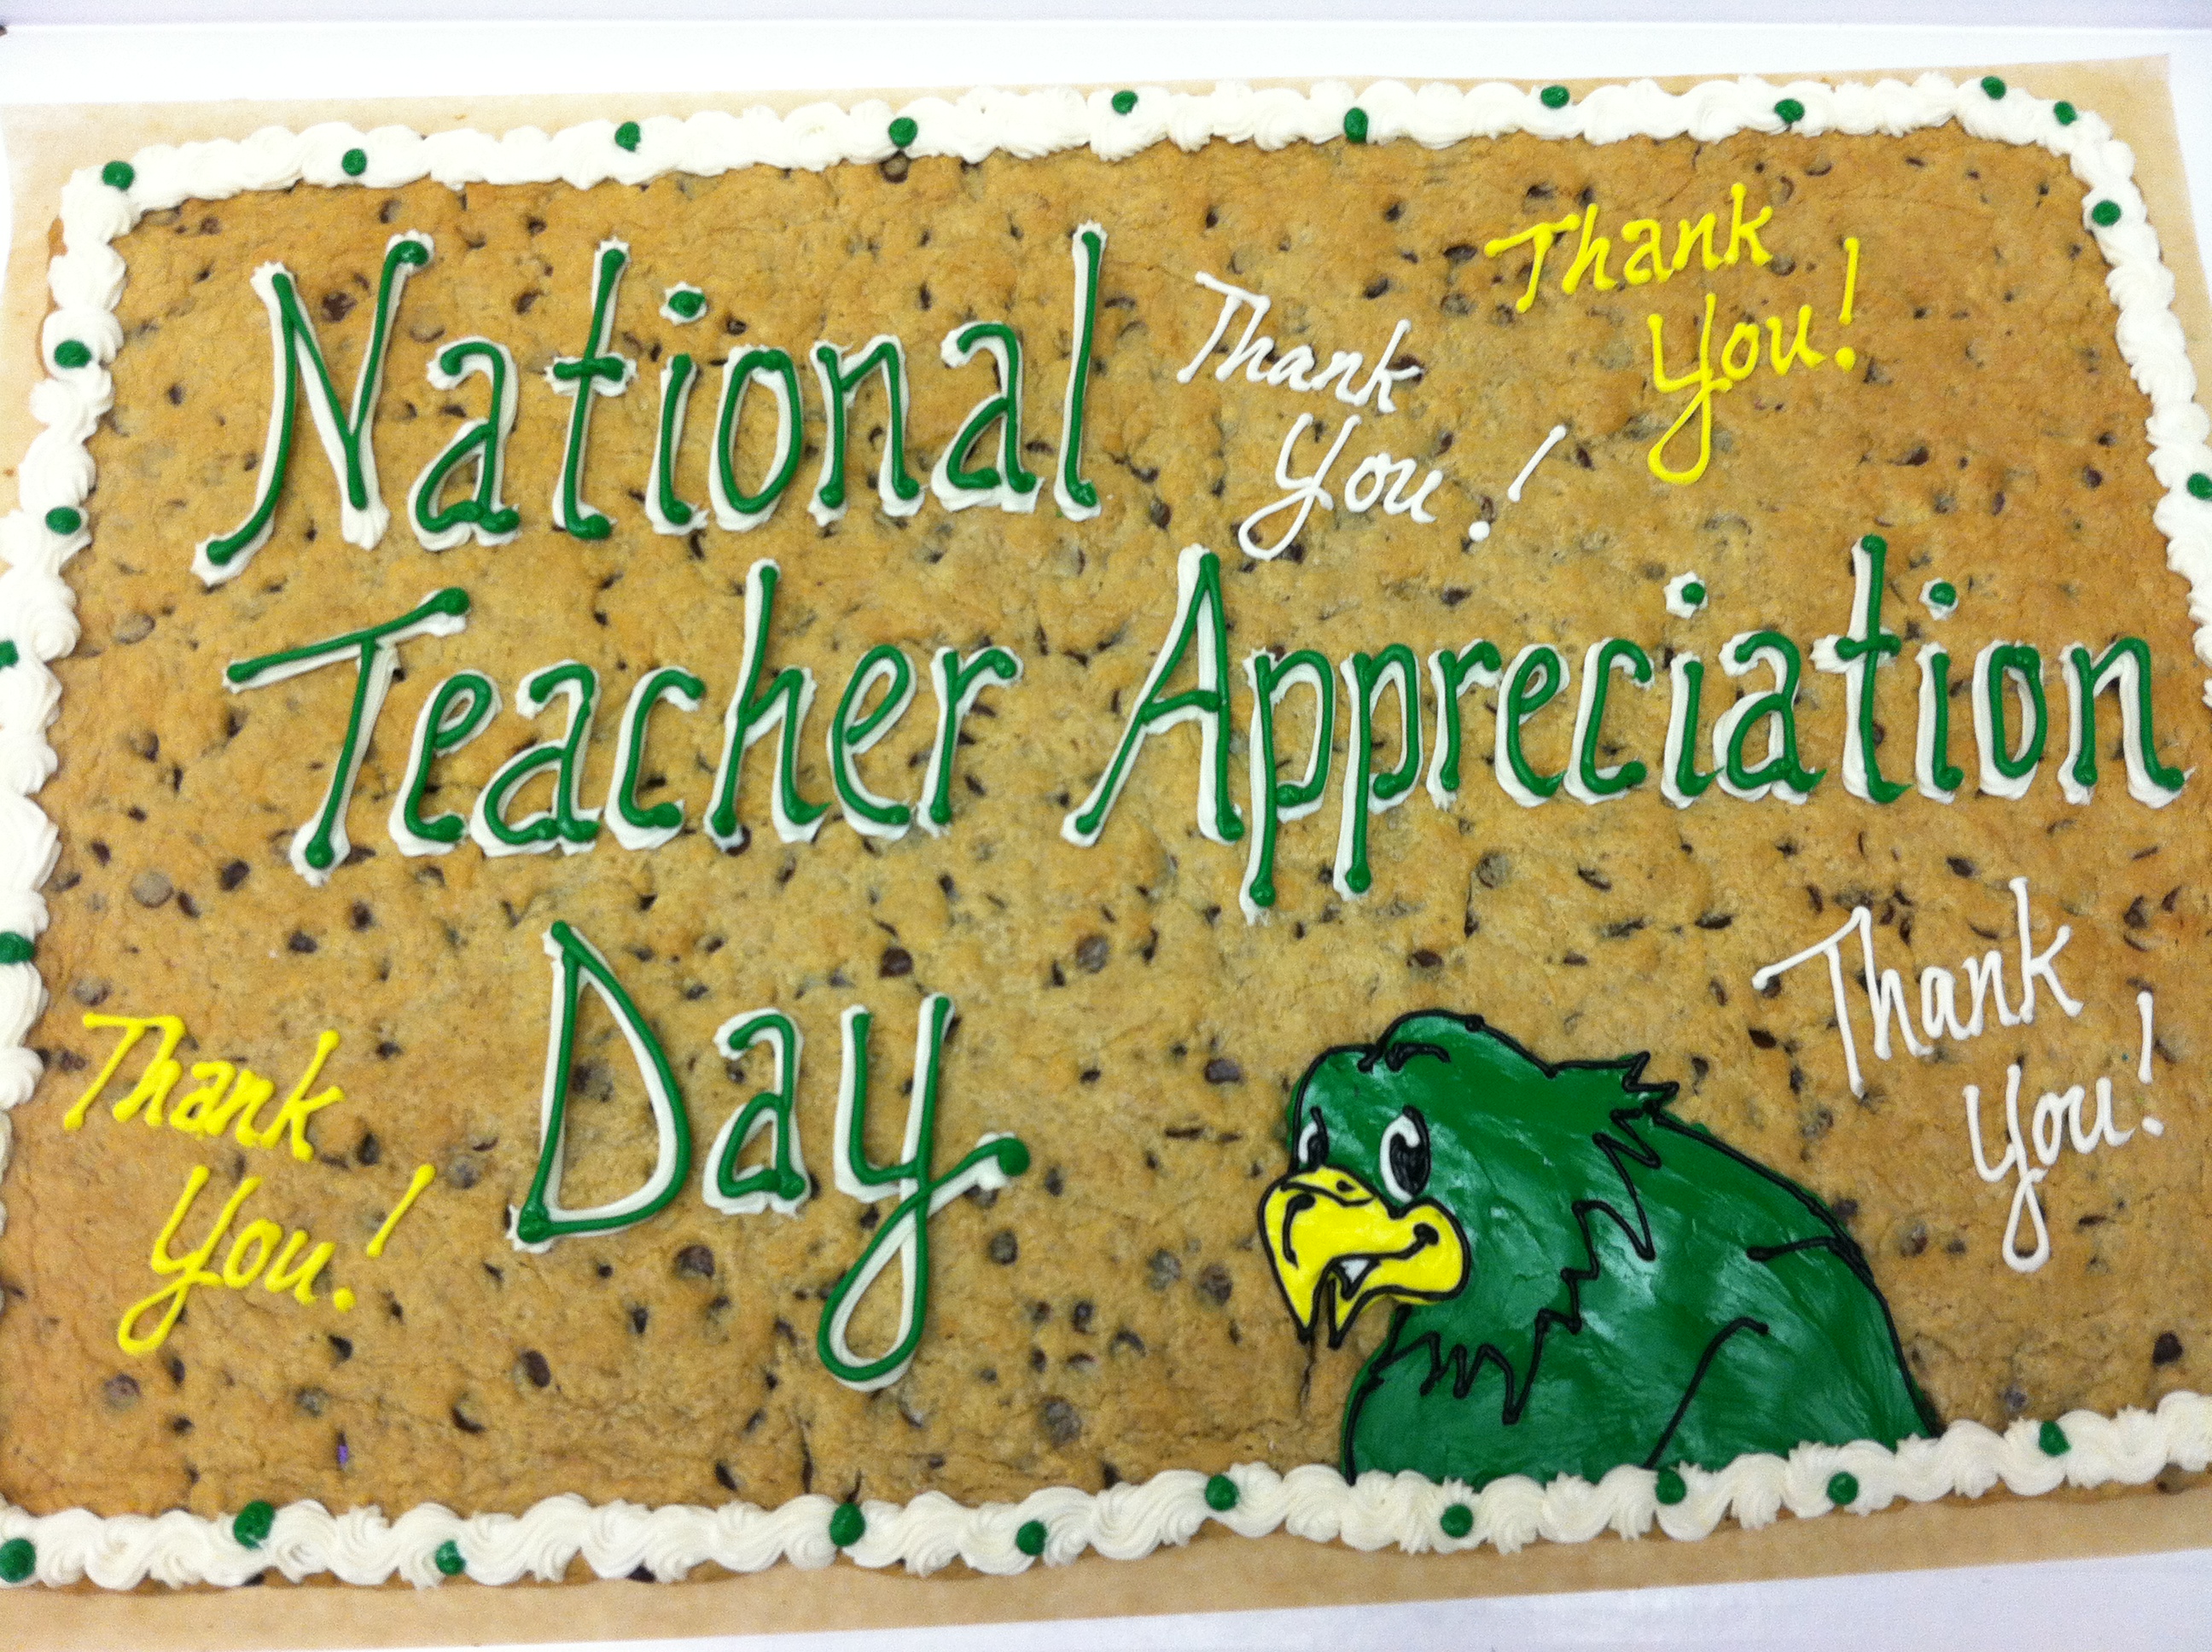 FS (National Teacher Appreciation Day) The Cookie Company